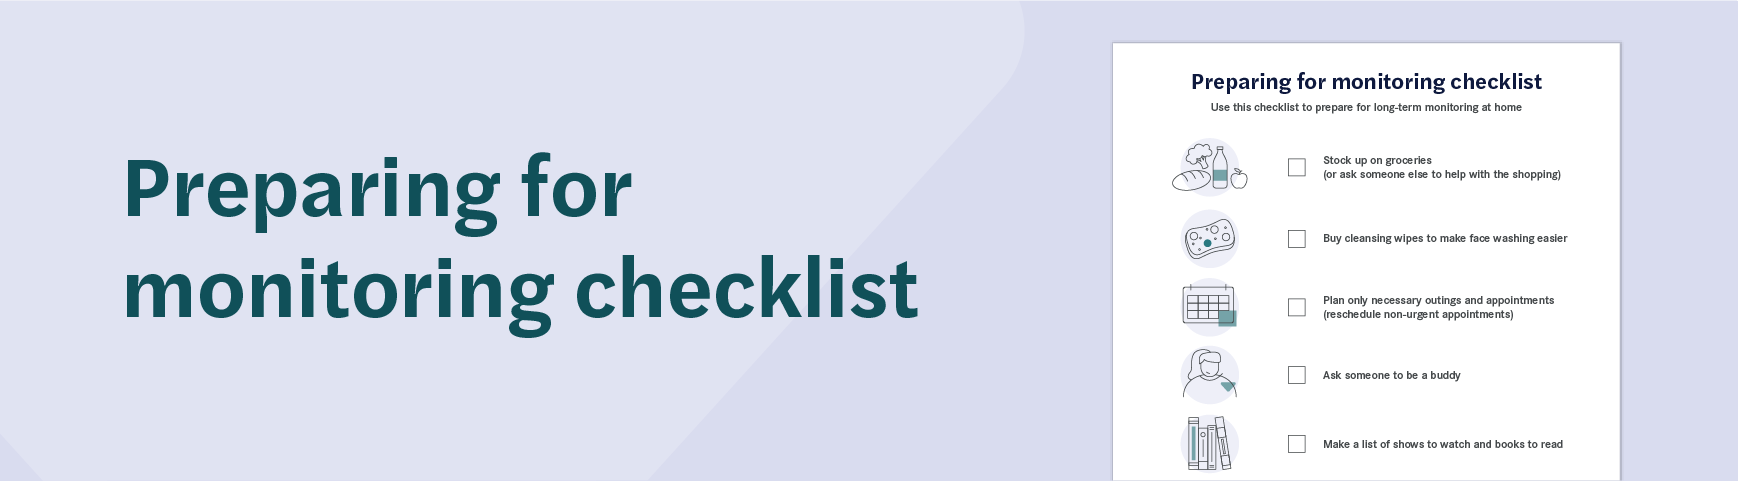 Download the Preparing for Monitoring Checklist.